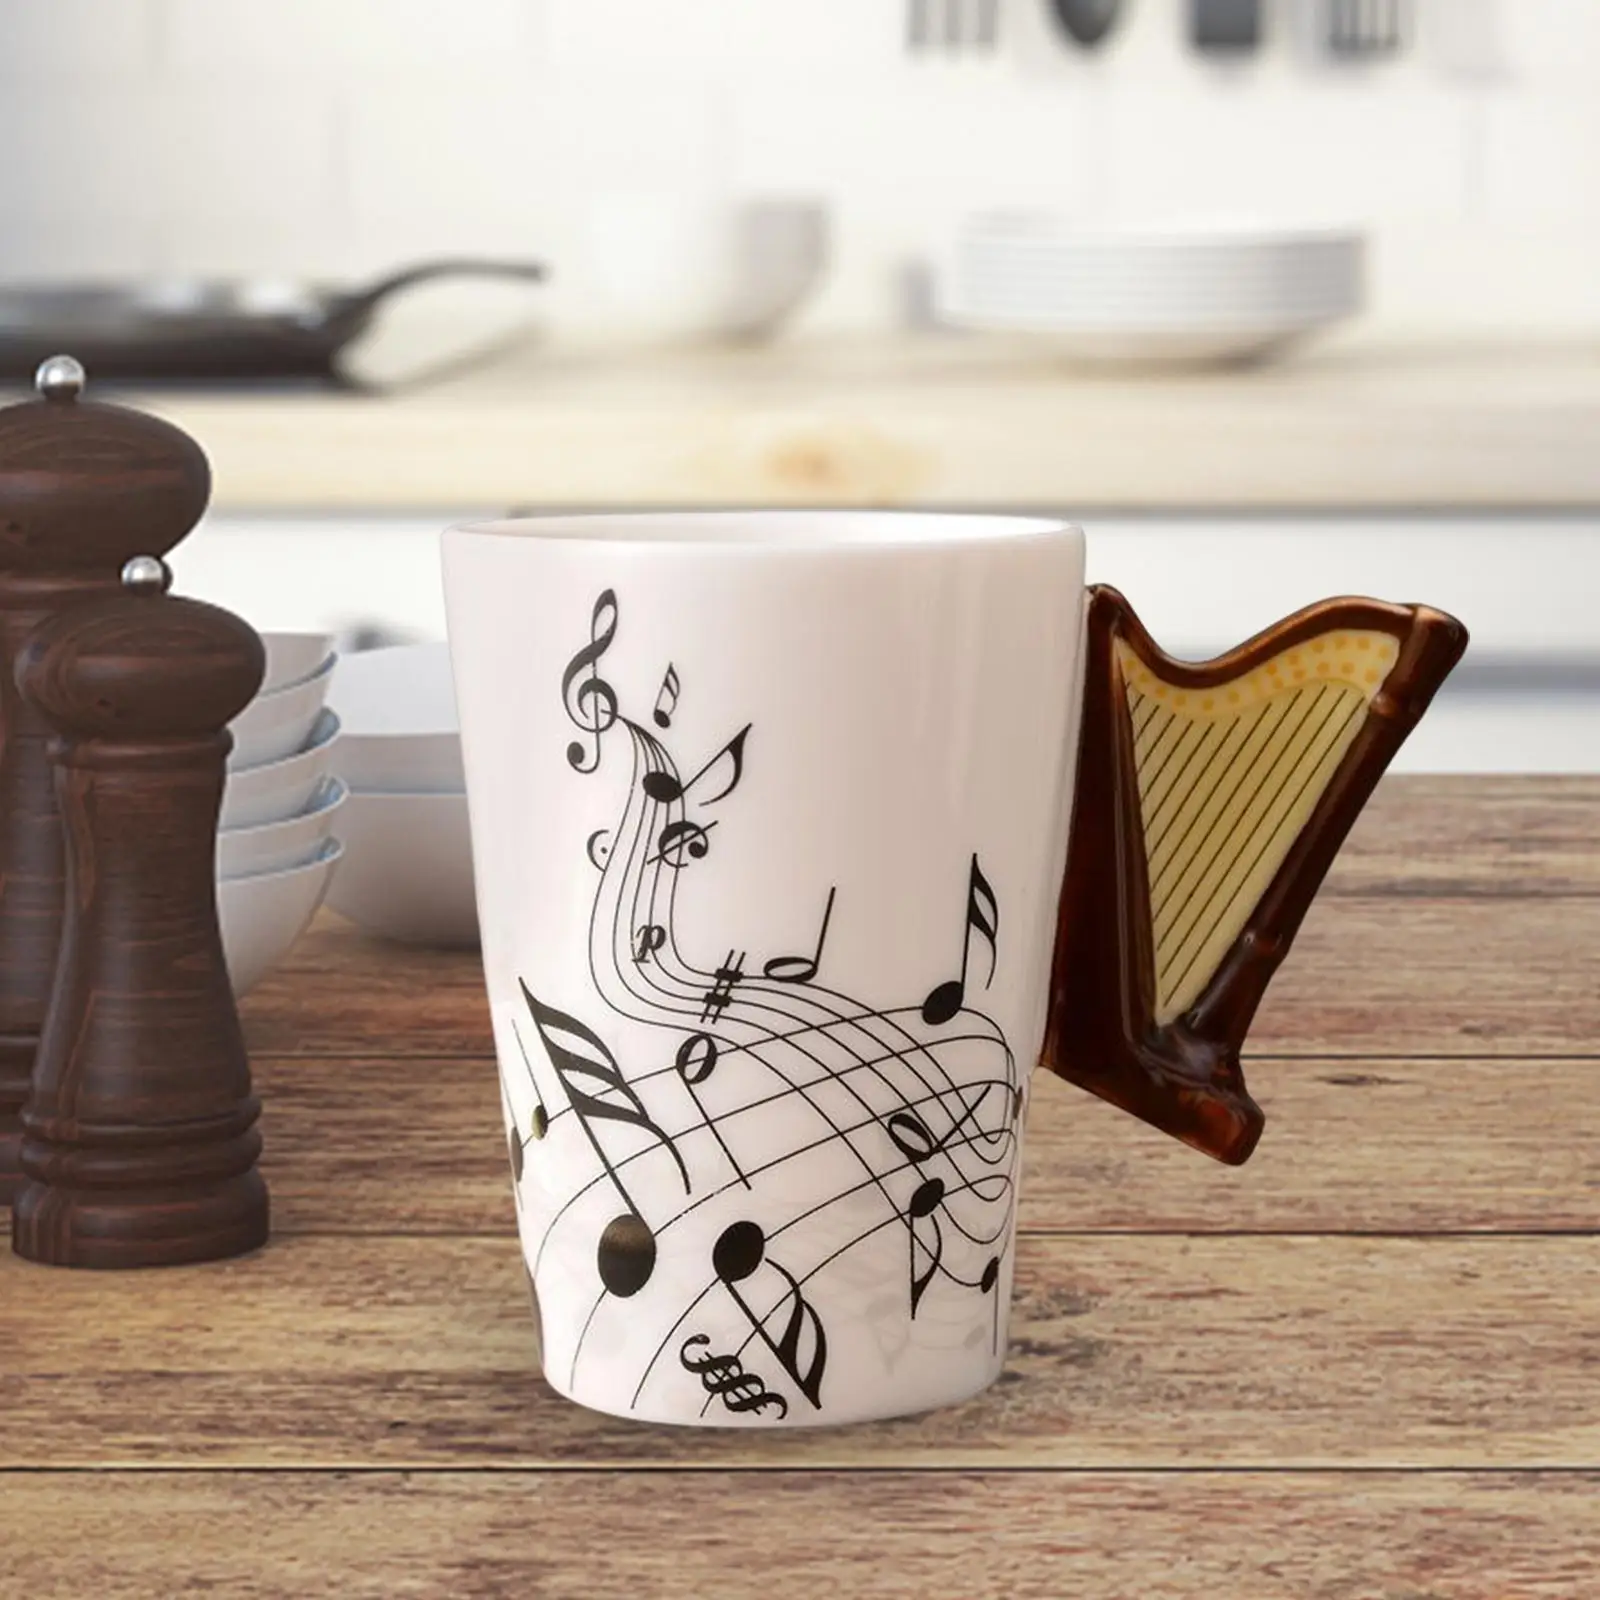 Ceramic Tea Mug Music Mug Teaware Mug Drinking Cup Harps Shape Coffee Cup Porcelain Mugs for Breakfast yogurt Milk Travel